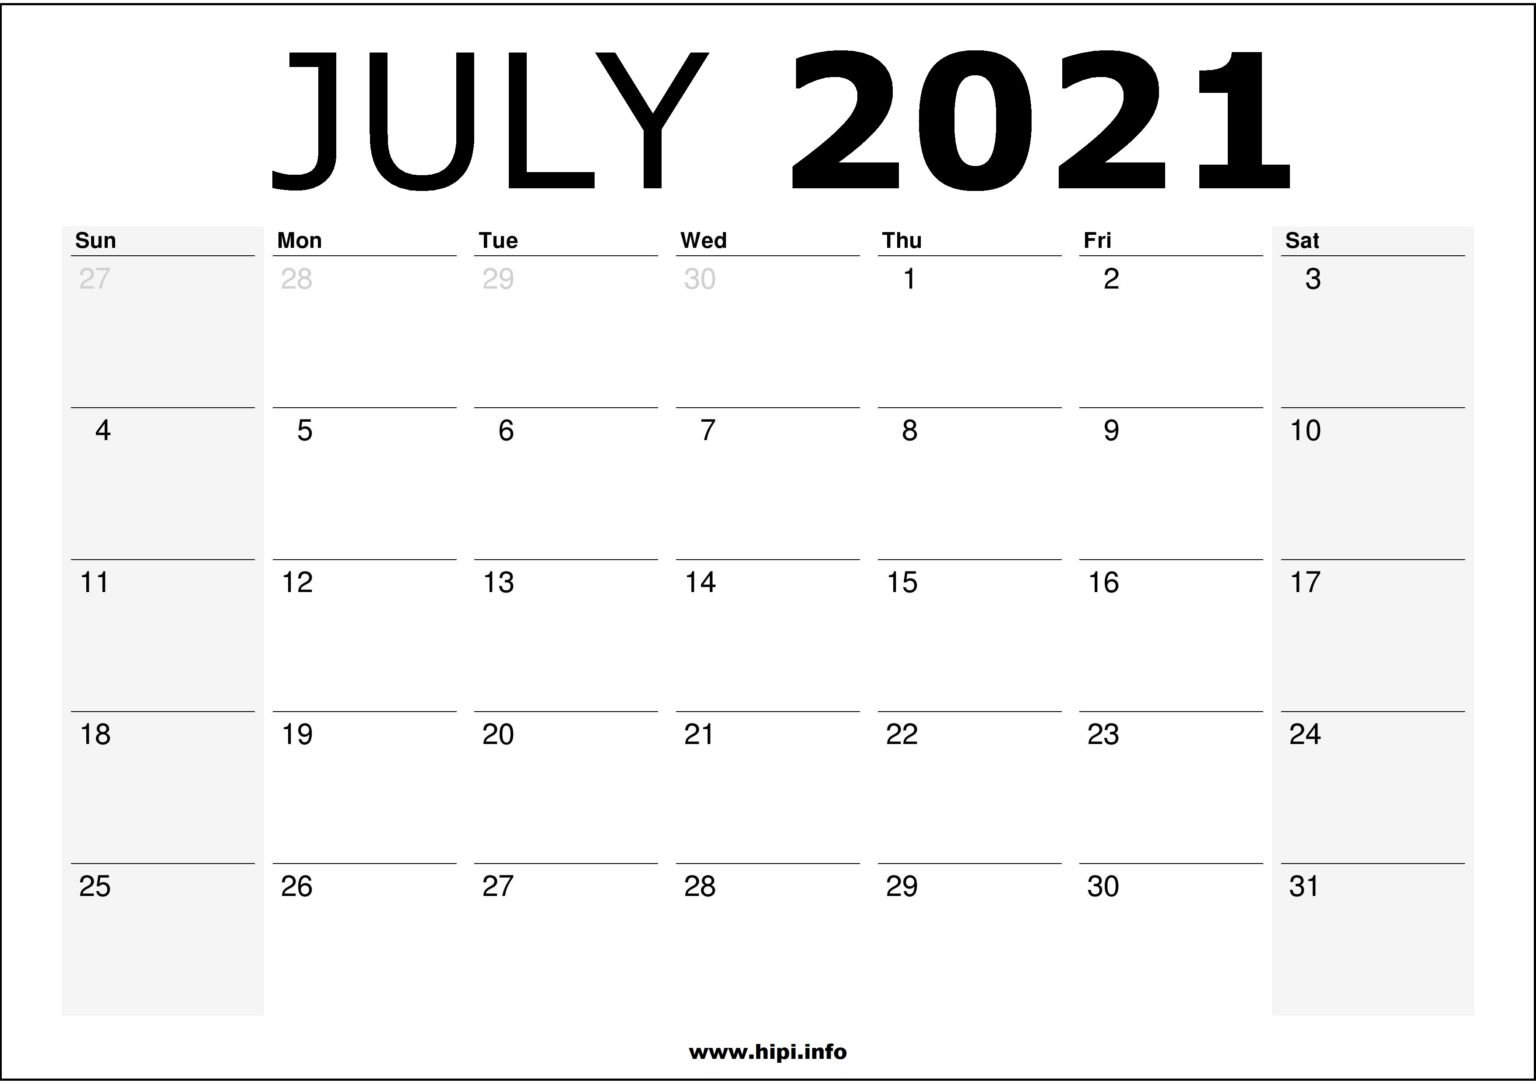 July 2021 Calendar Printable Monthly Calendar Free Download Hipi.info